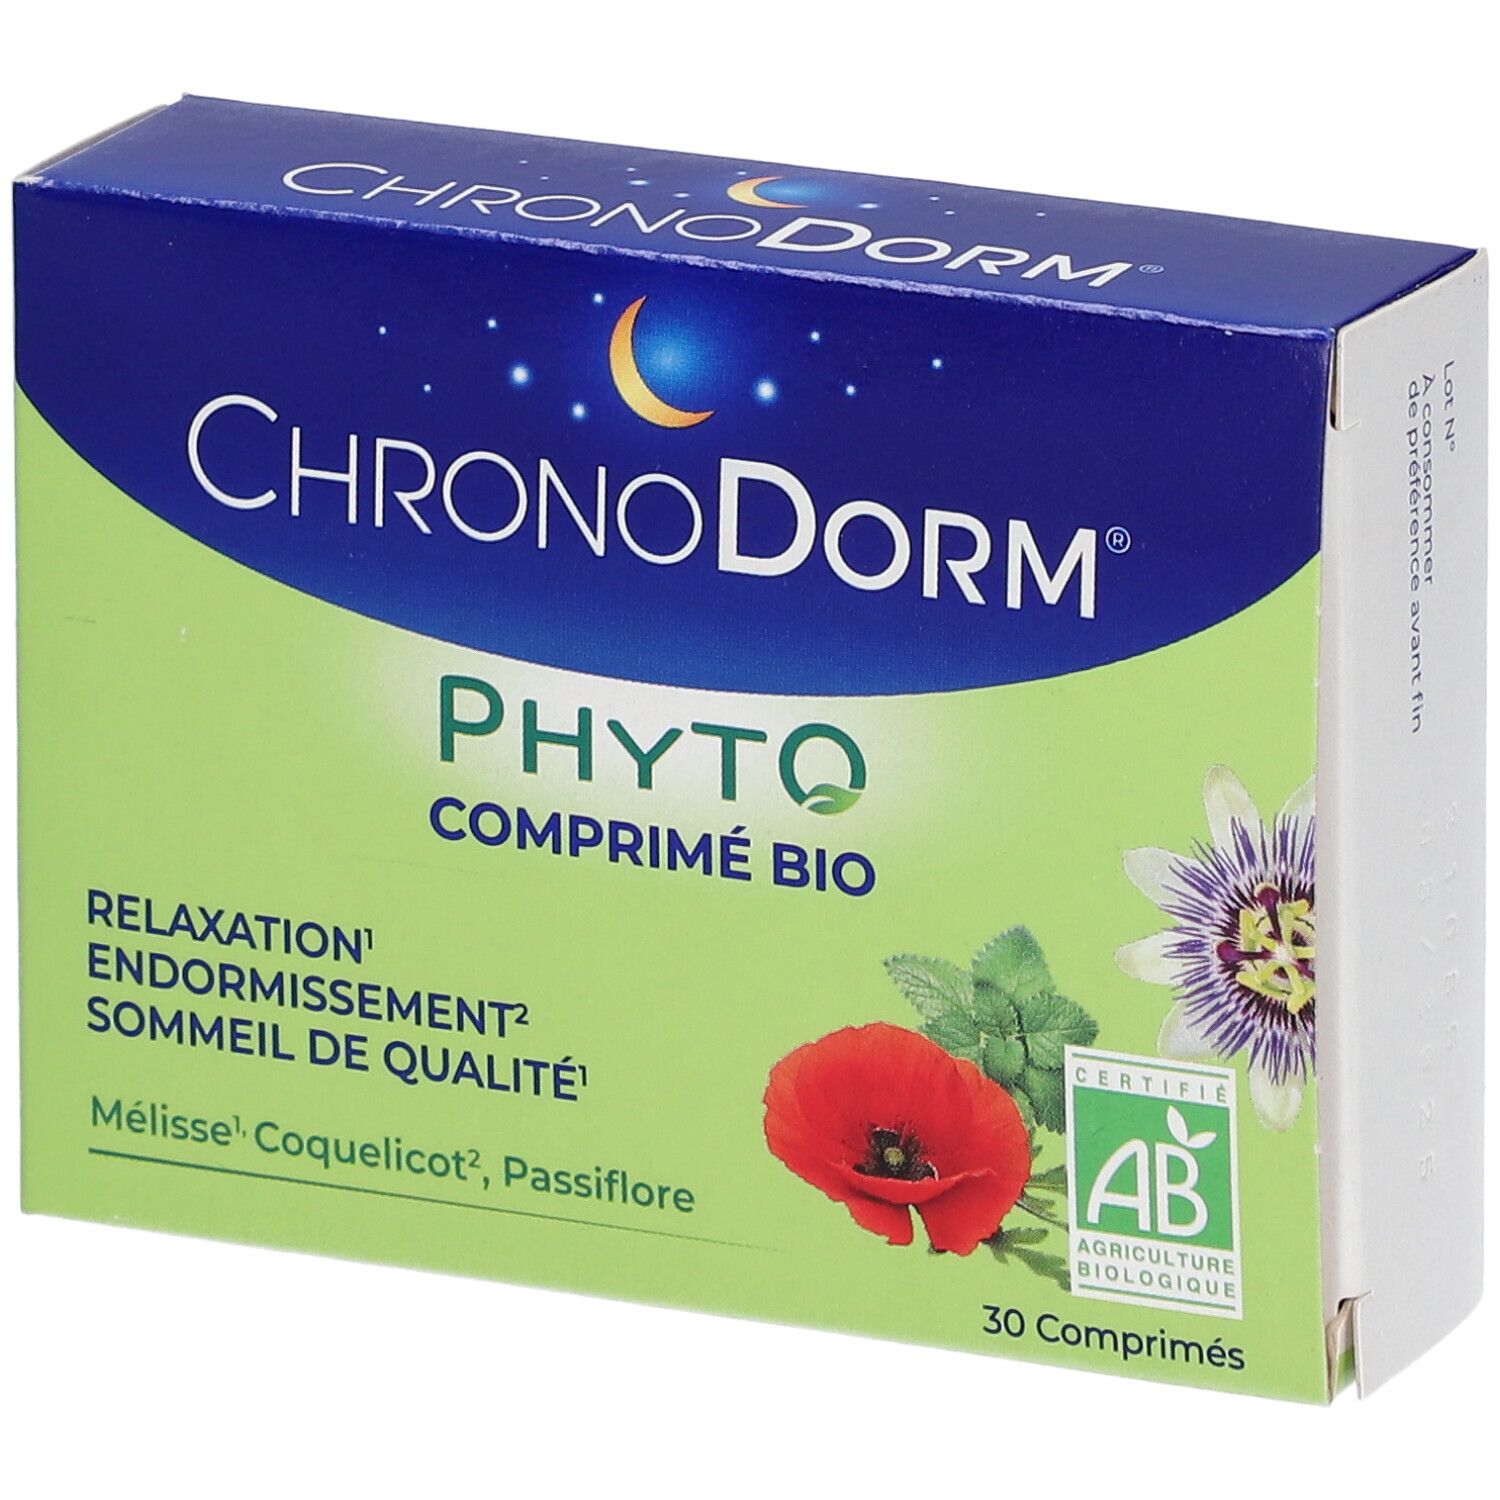 Chronodorm® Phyto bio